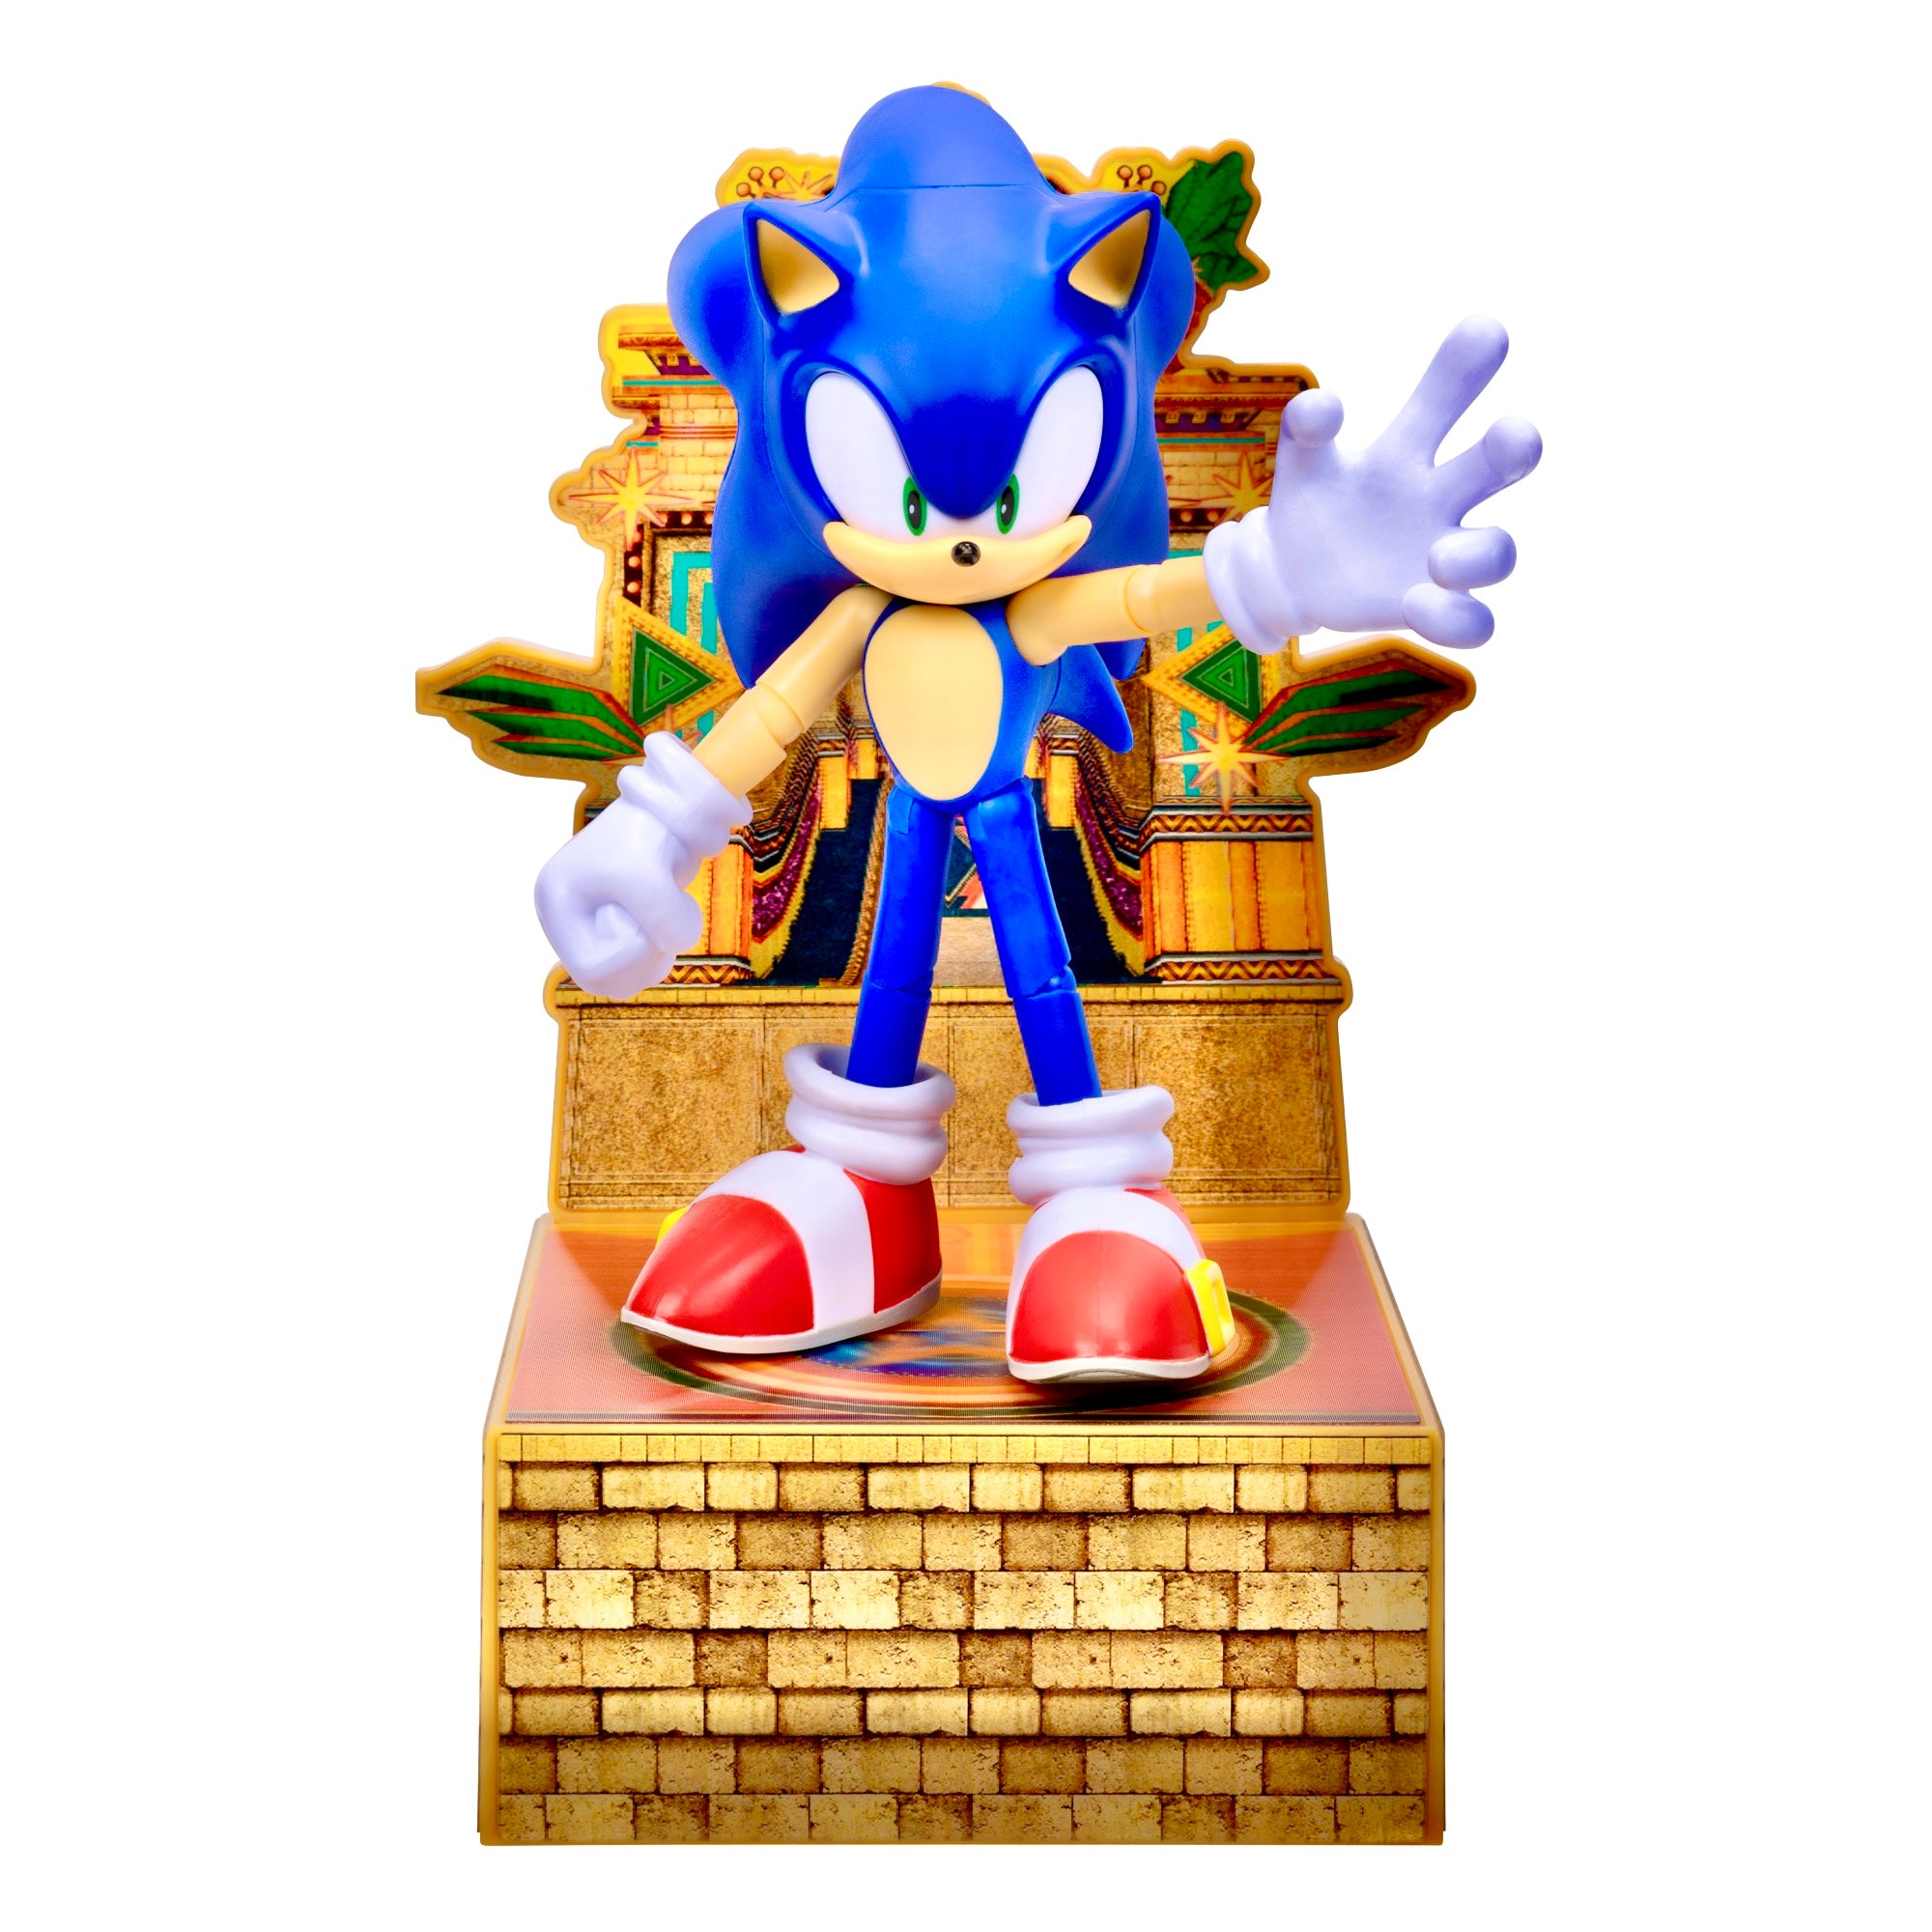 Sonic The Hedgehog - Collector's Edition (Modern) - figurine Jakks Pacific  Sonic The Hedgehog